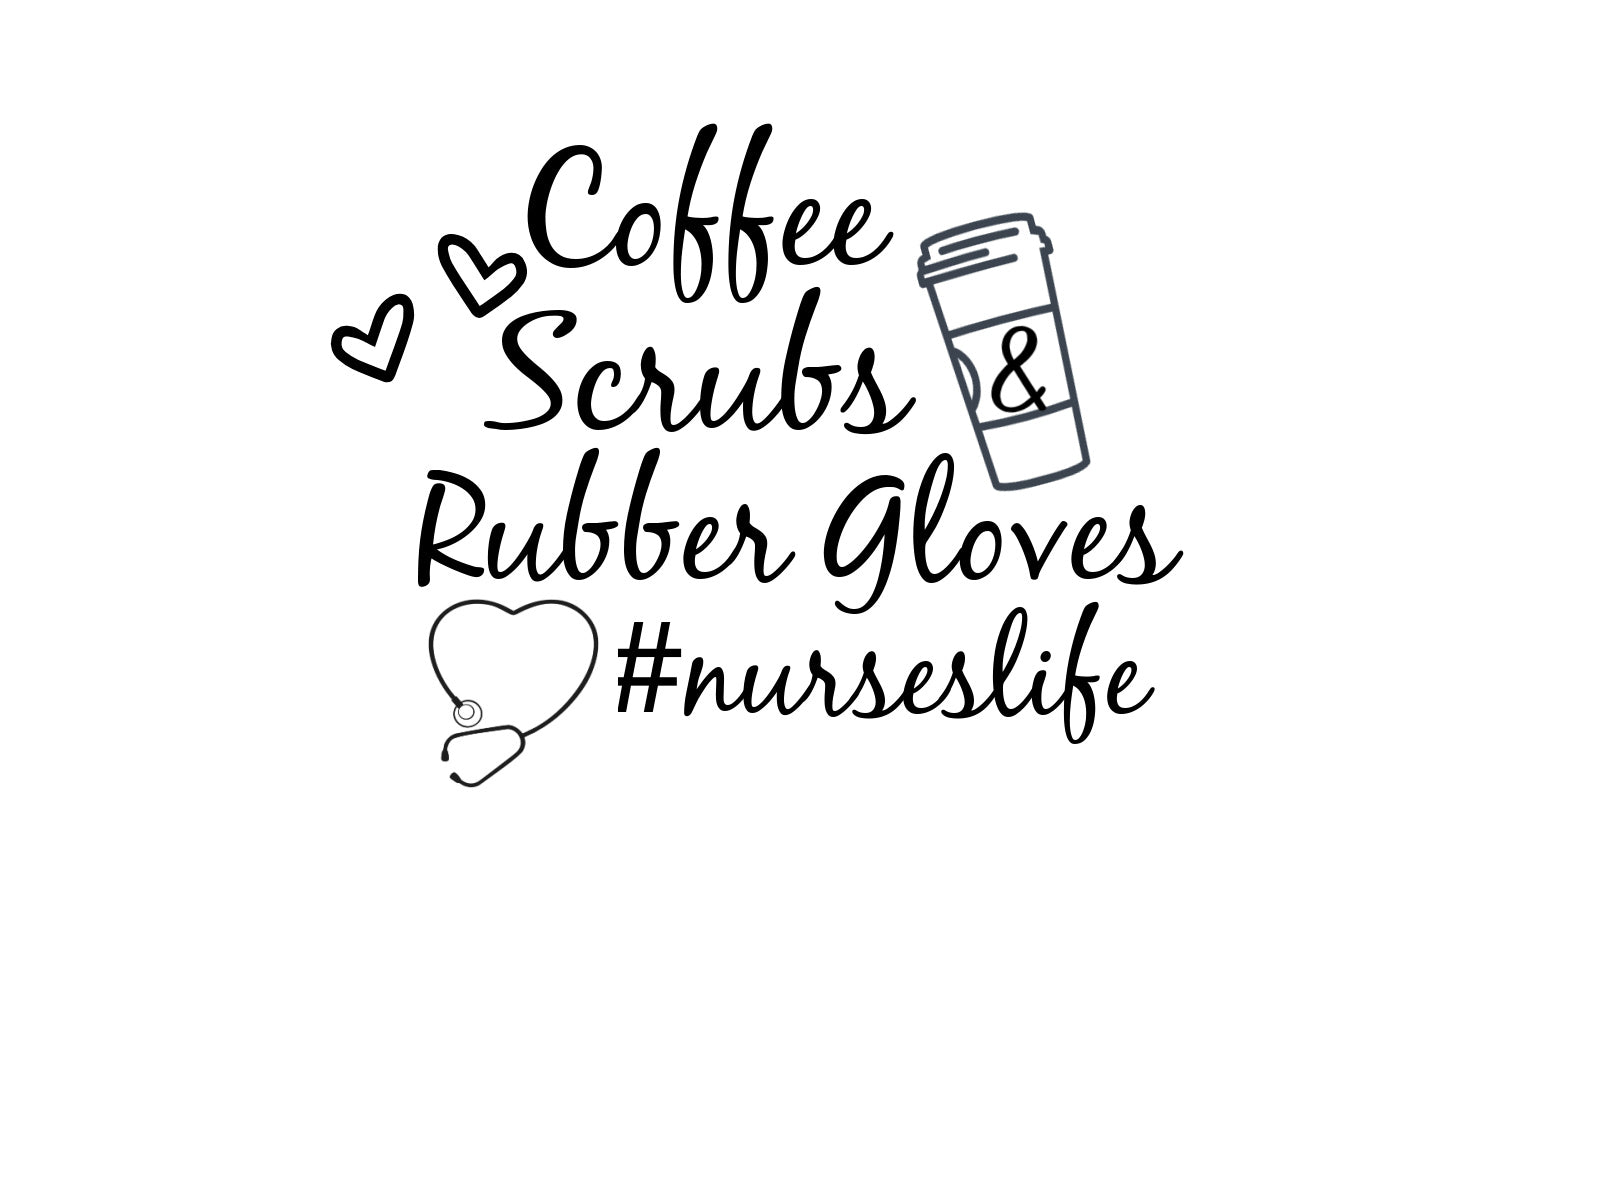 Coffee Scrubs & Rubber Gloves. #nurseslife